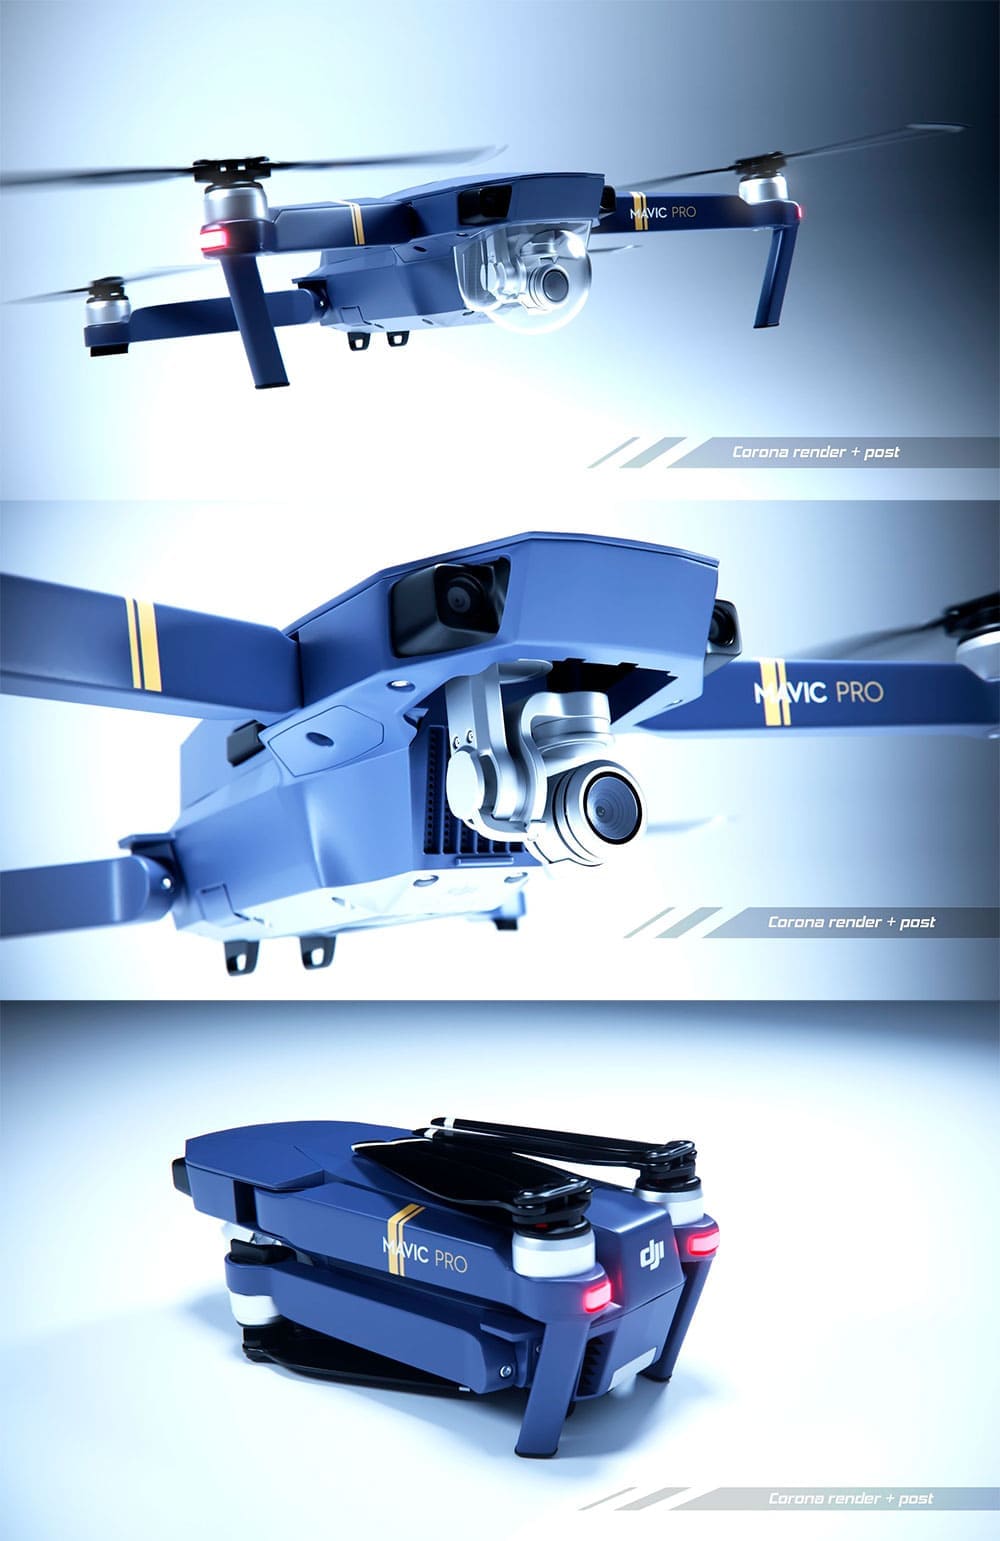 Dji mavic pro quadcopter 3d model, picture for pinterest.